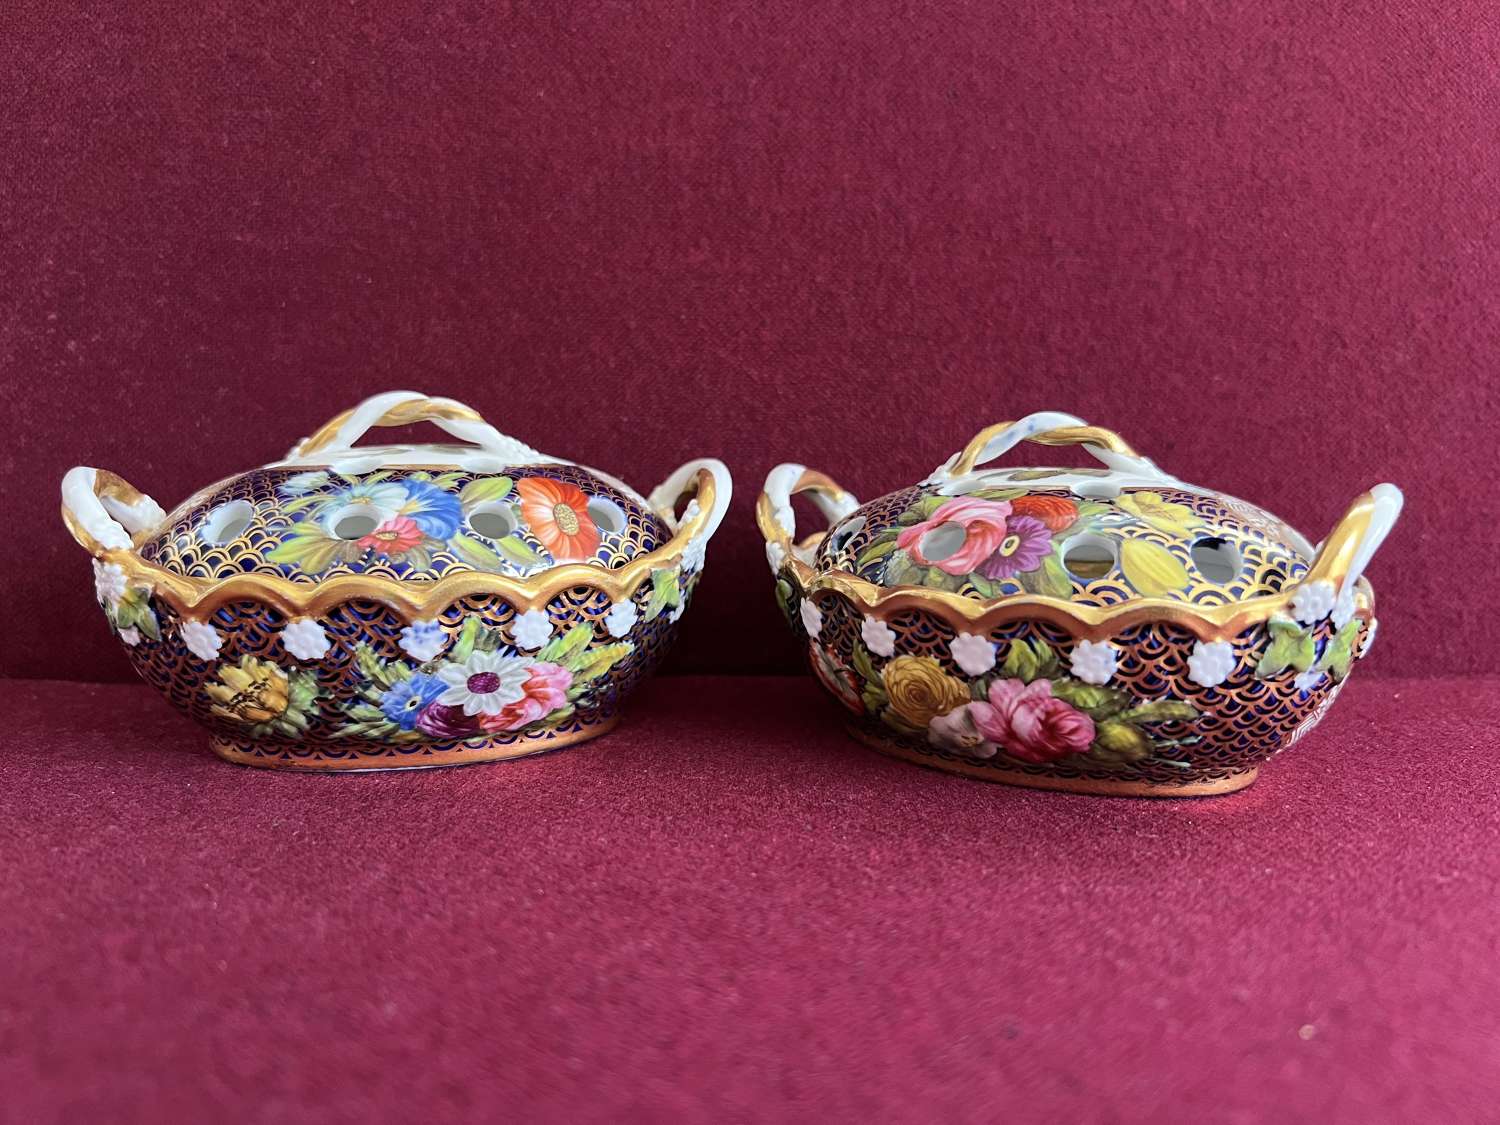 A pair of Spode Violet Pot Pourri baskets c.1815-20 in pattern 1166